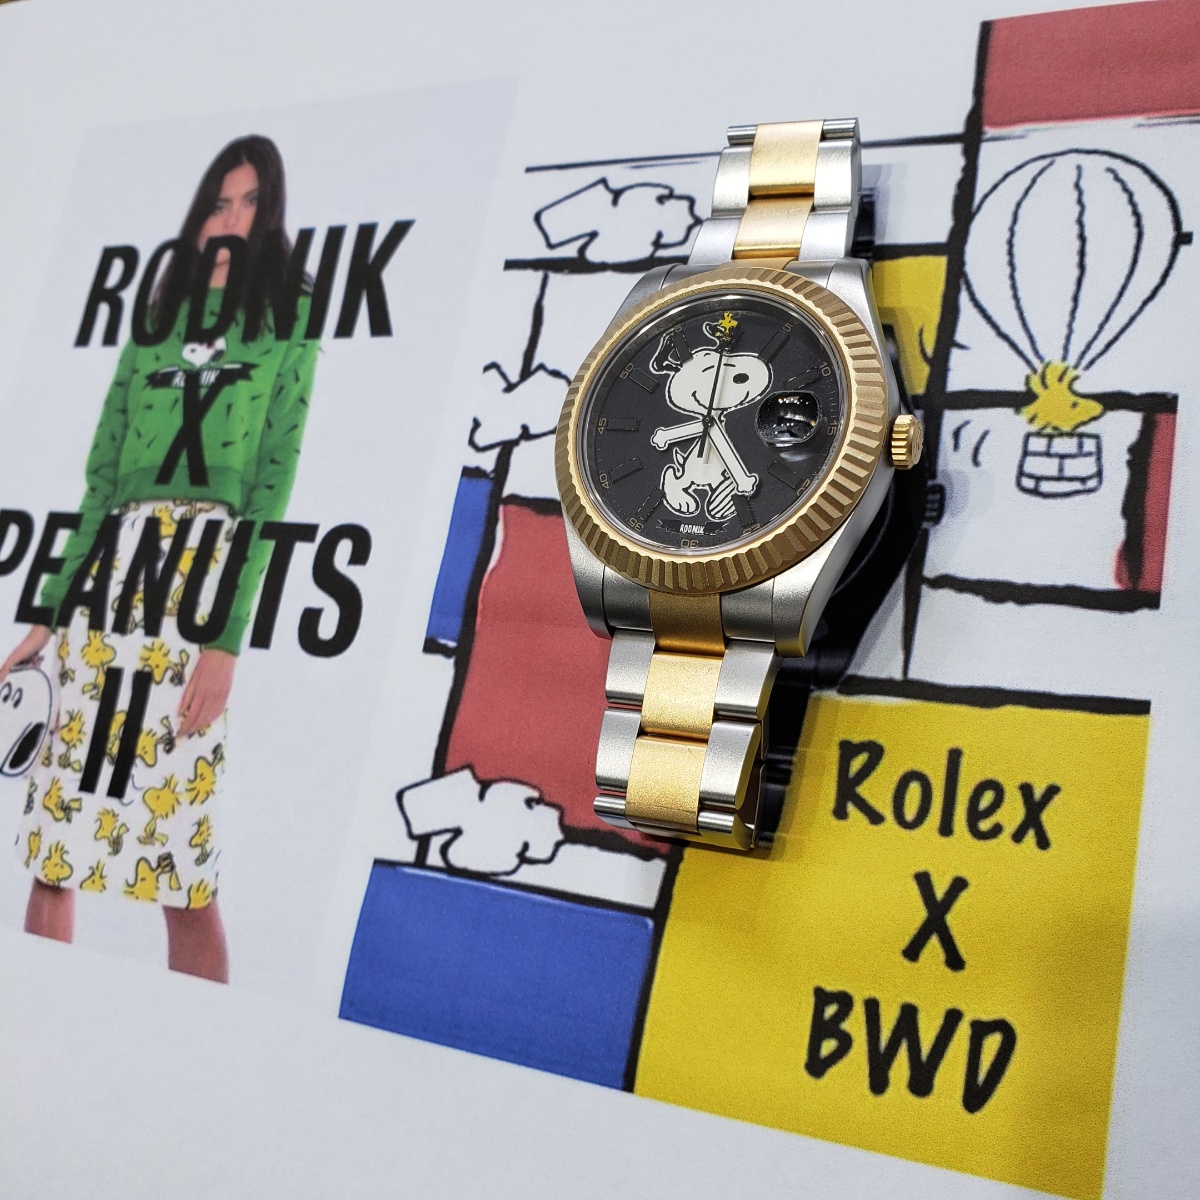 Rolex Rodnik Peanuts Bamford デイトジャスト41 スヌーピー マットチタンコンビ 世界限定25本 中古美品 Gentle